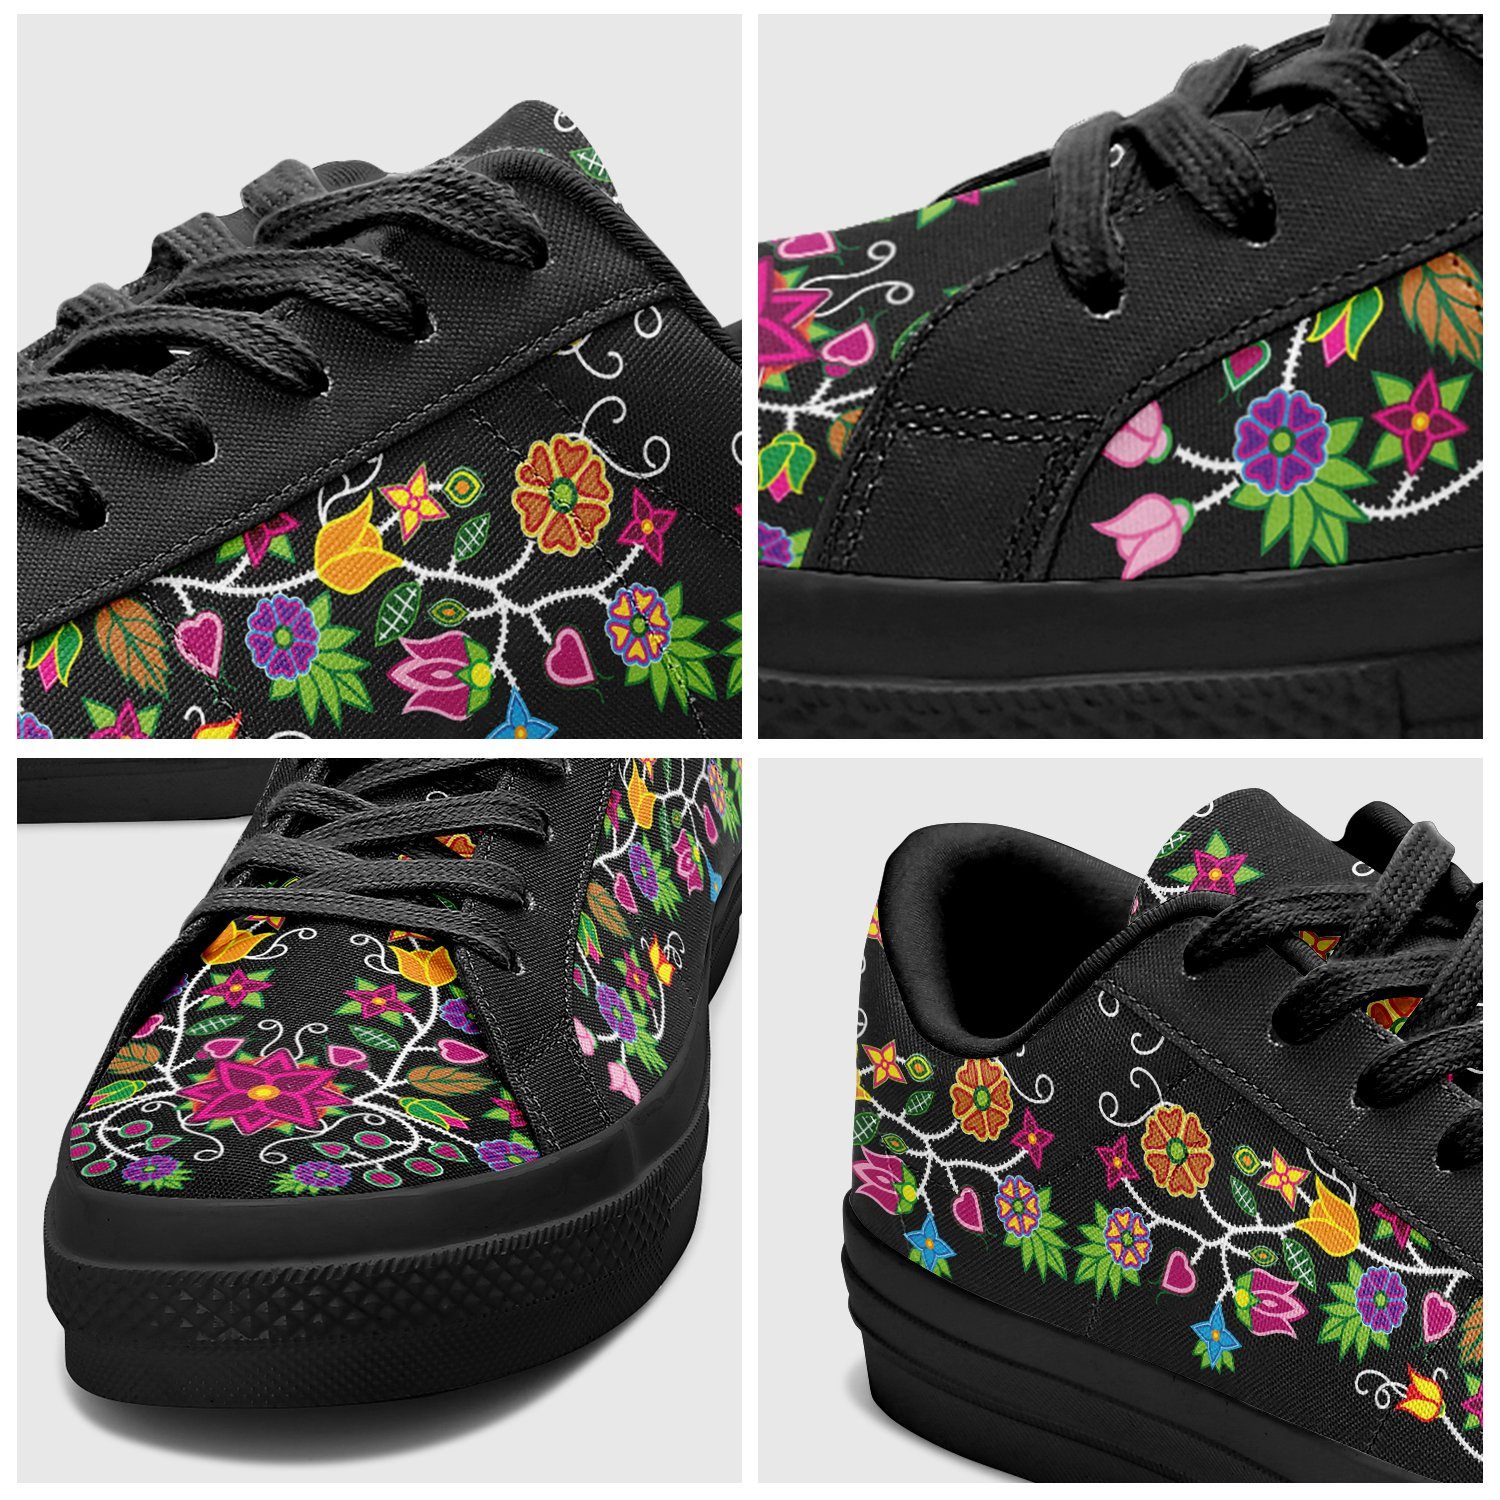 Floral Beadwork - 01 Aapisi Low Top Canvas Shoes Black Sole 49 Dzine 